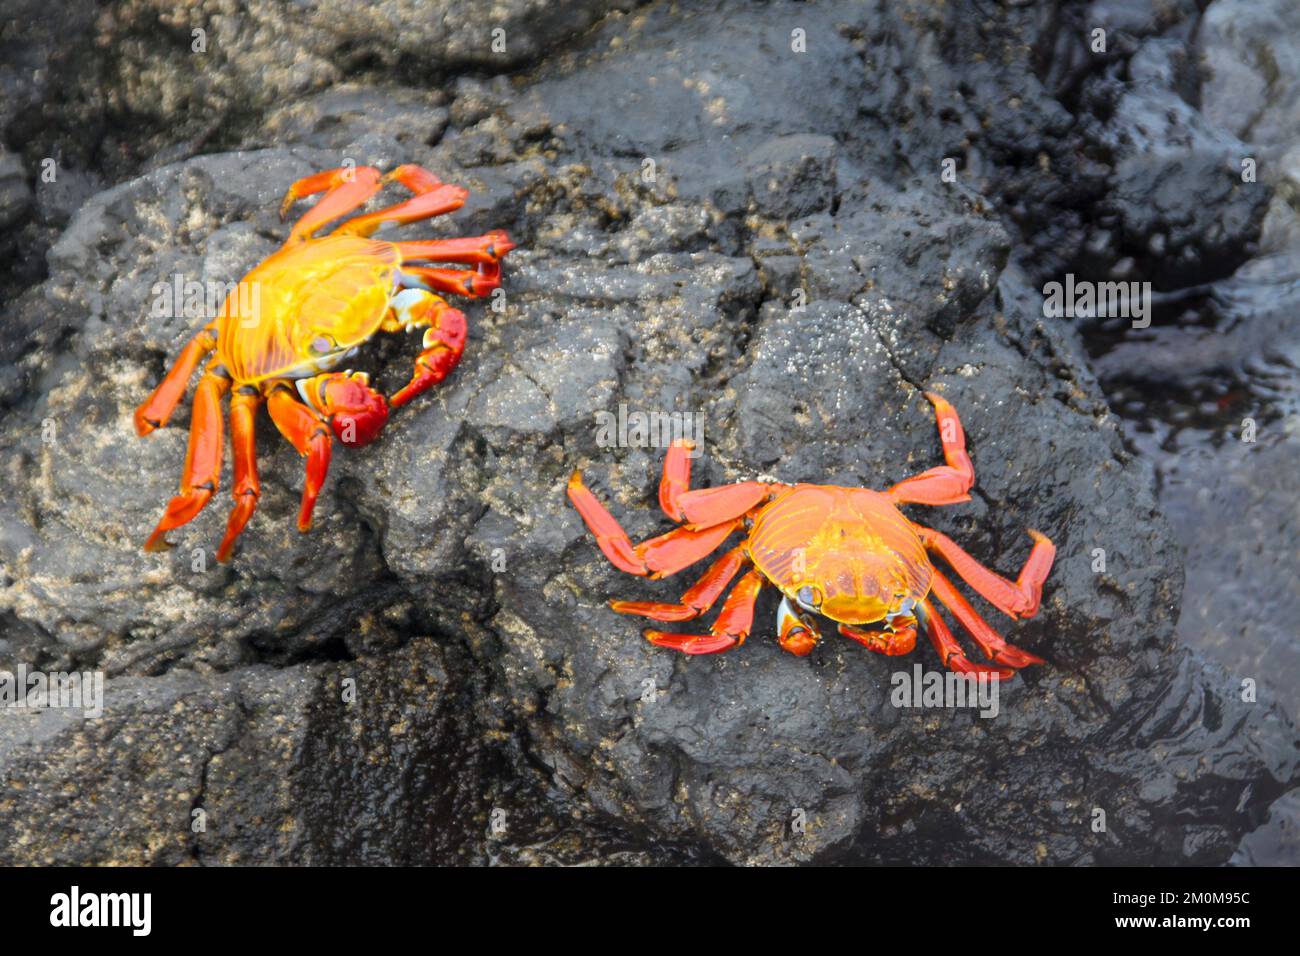 Rote Steinkrabbe, auch bekannt als Sally lightfoot Crab (Grapsus grapsus) auf Lava, Galapagos. Stockfoto